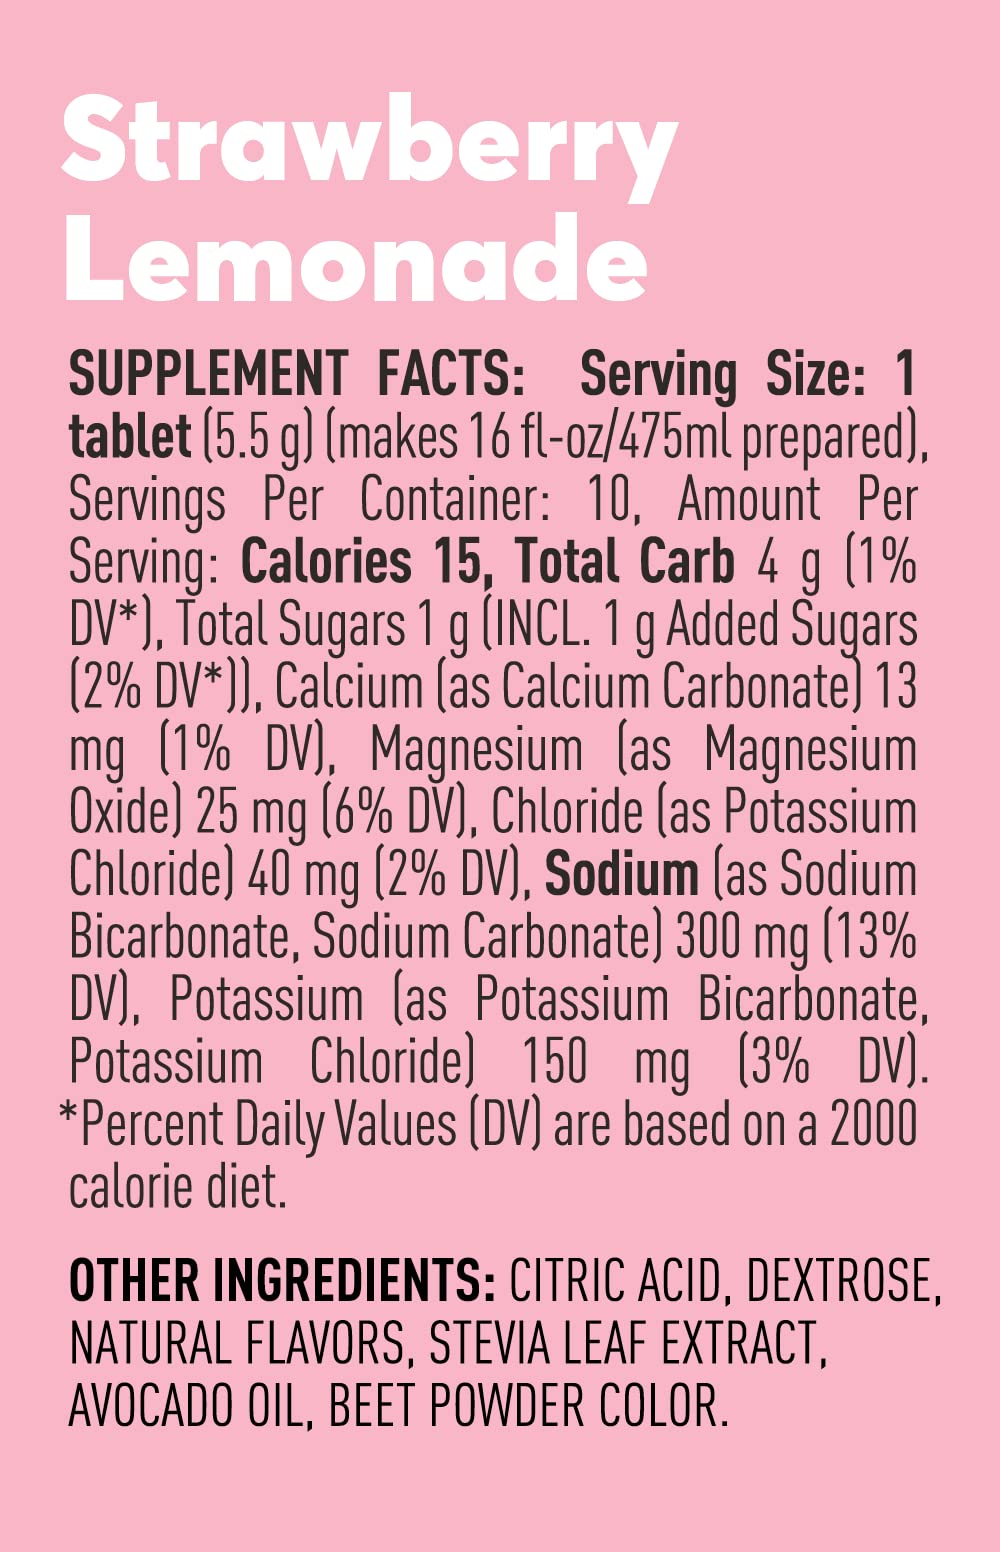 Nuun Sport: Electrolyte Drink Tablets, Strawberry Lemonade,(8 count)(Pack of 1)(10 servings each)